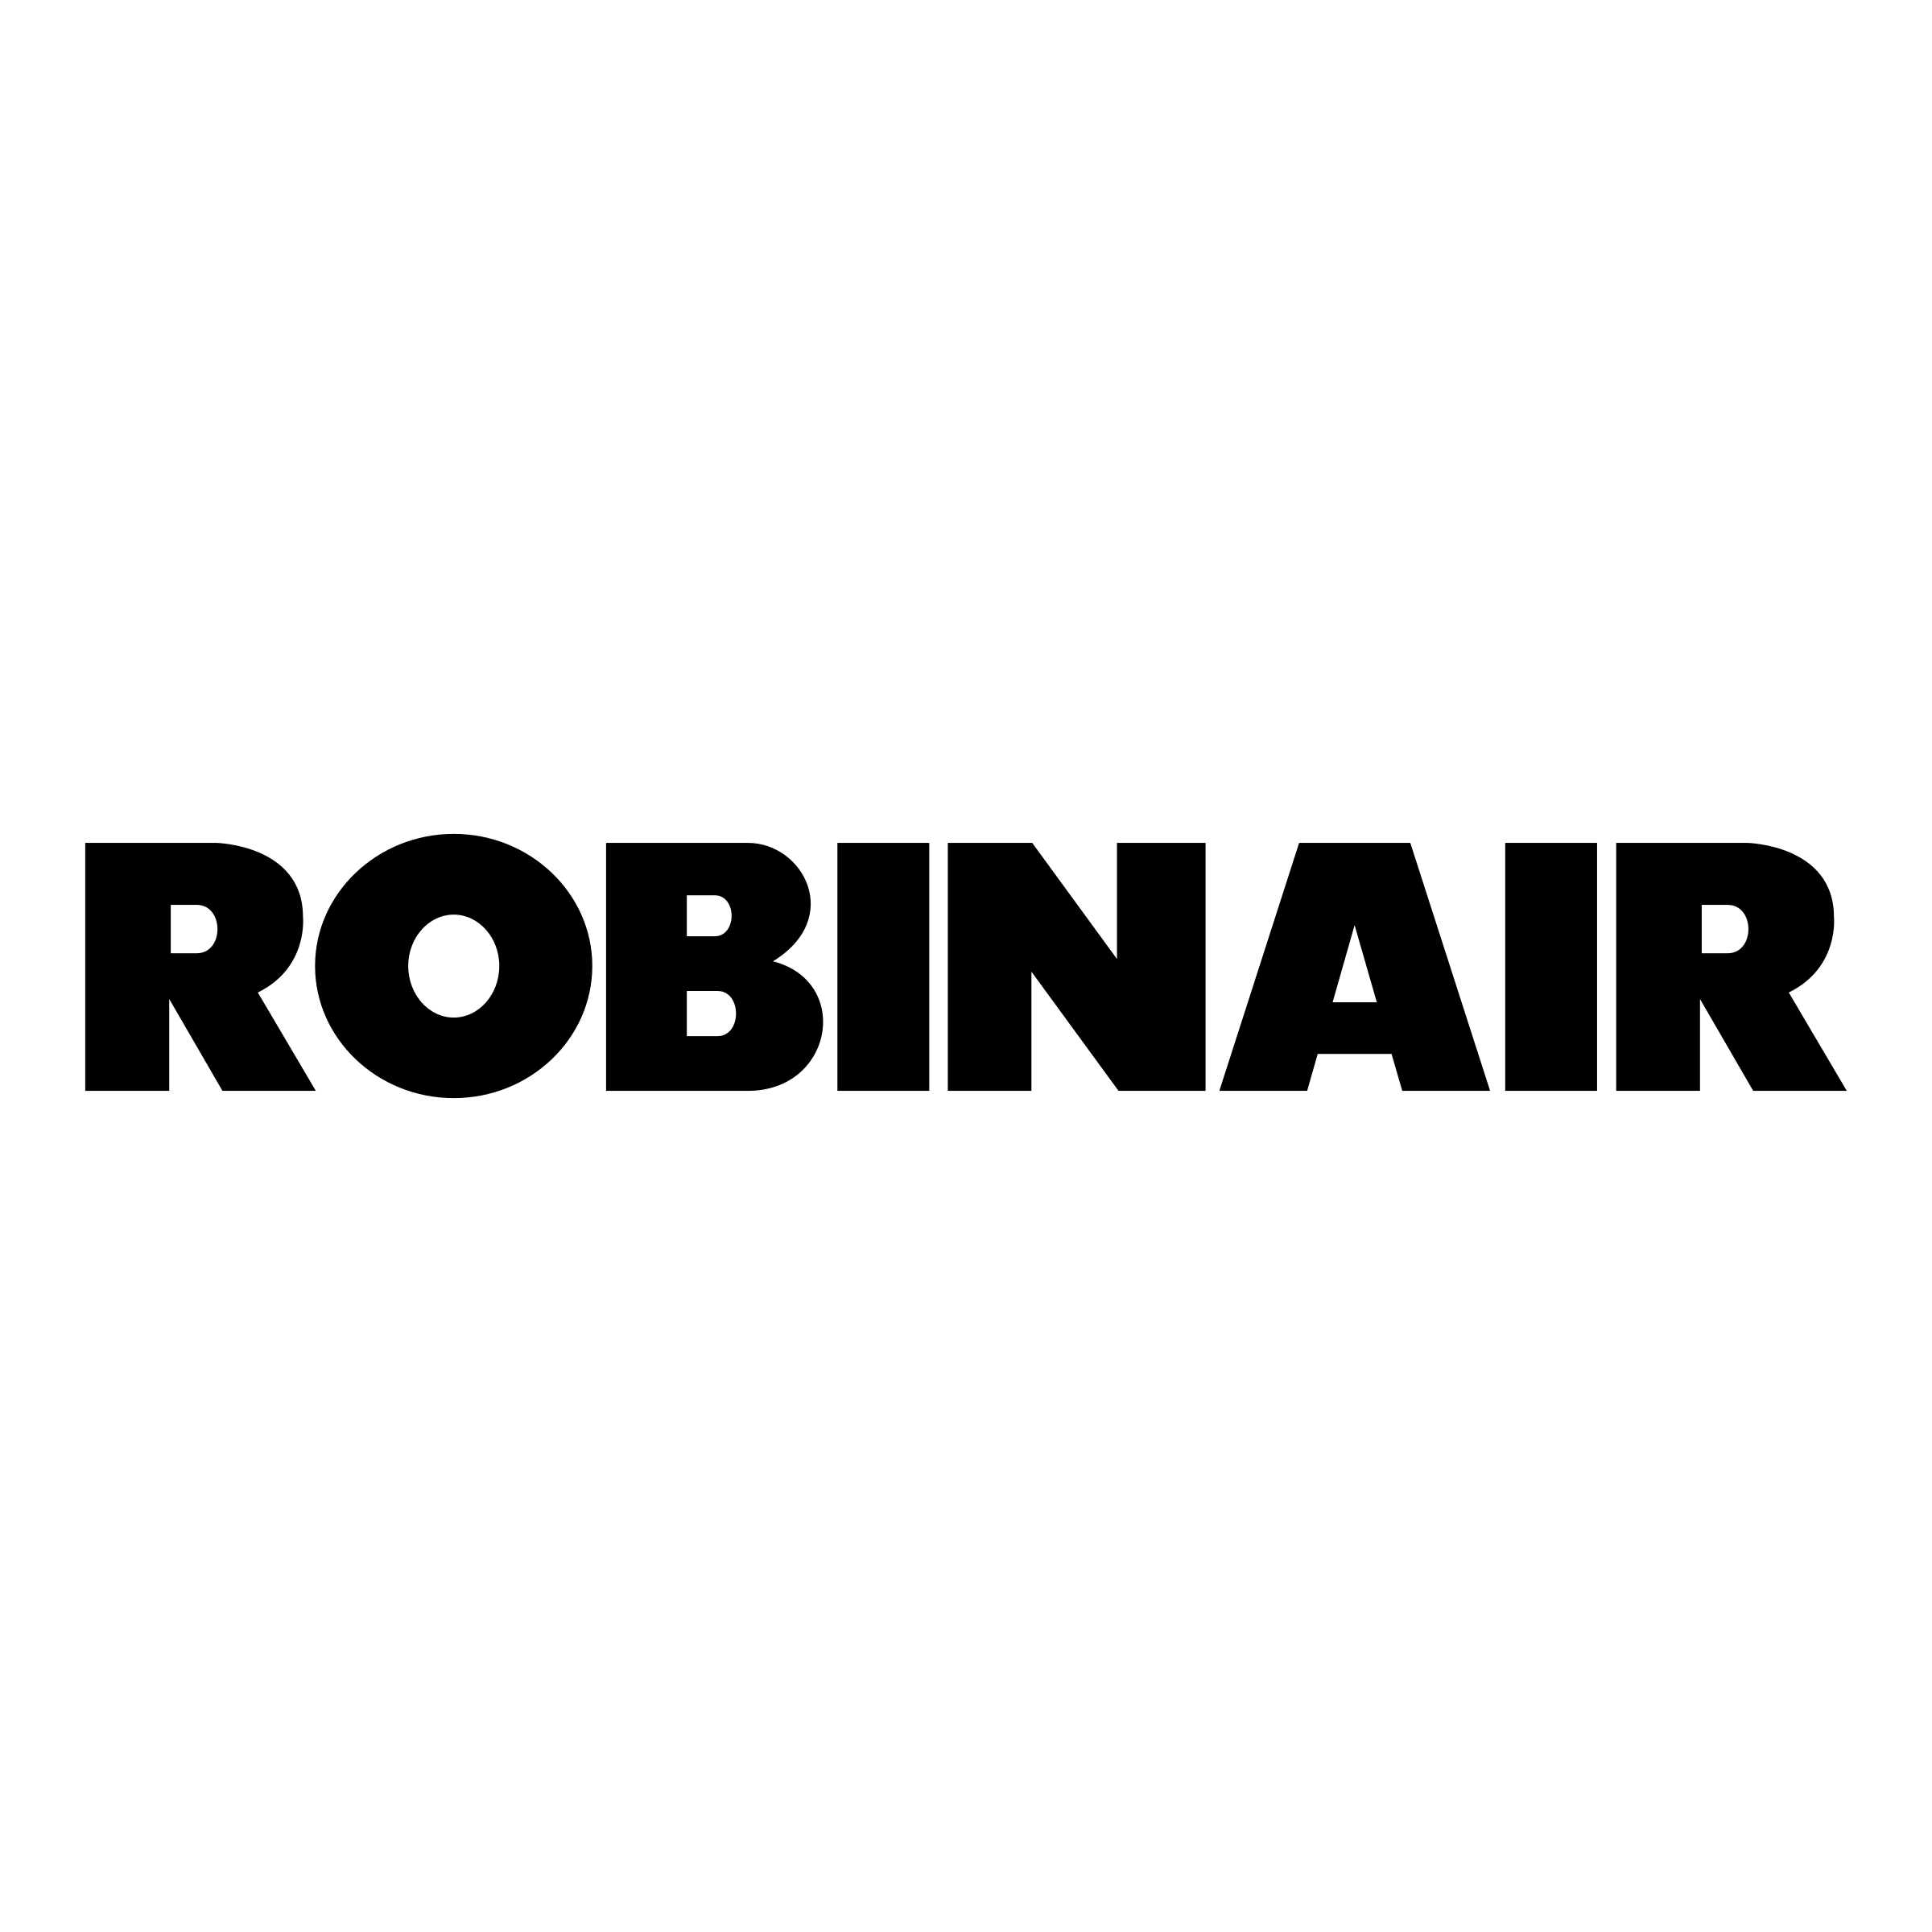 Robinair Logo - Robinair Logo PNG Transparent & SVG Vector